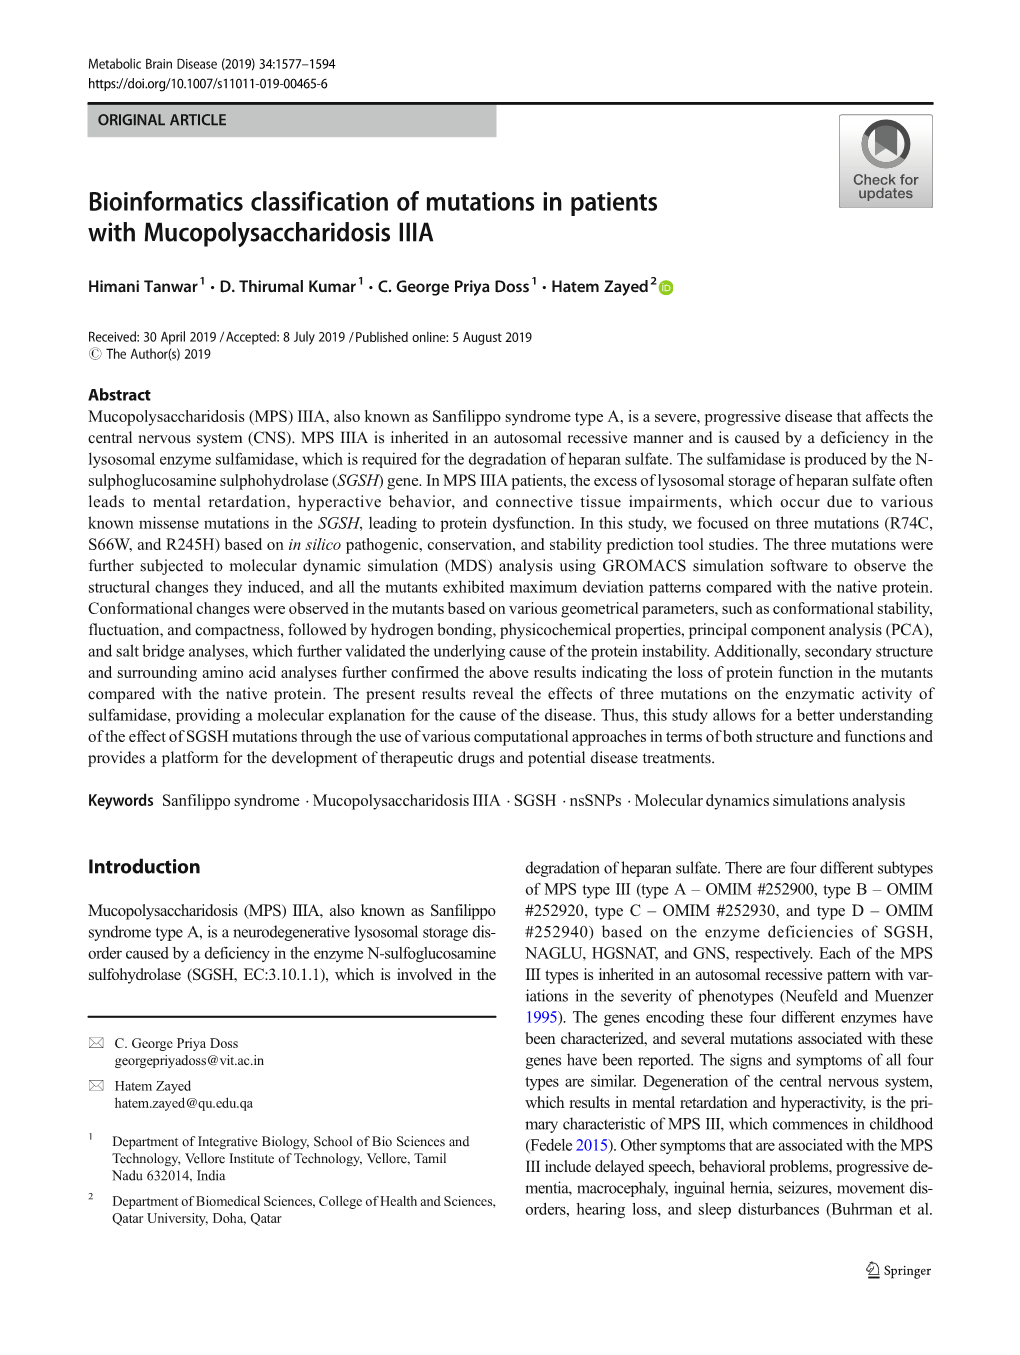 Bioinformatics Classification of Mutations in Patients with Mucopolysaccharidosis IIIA